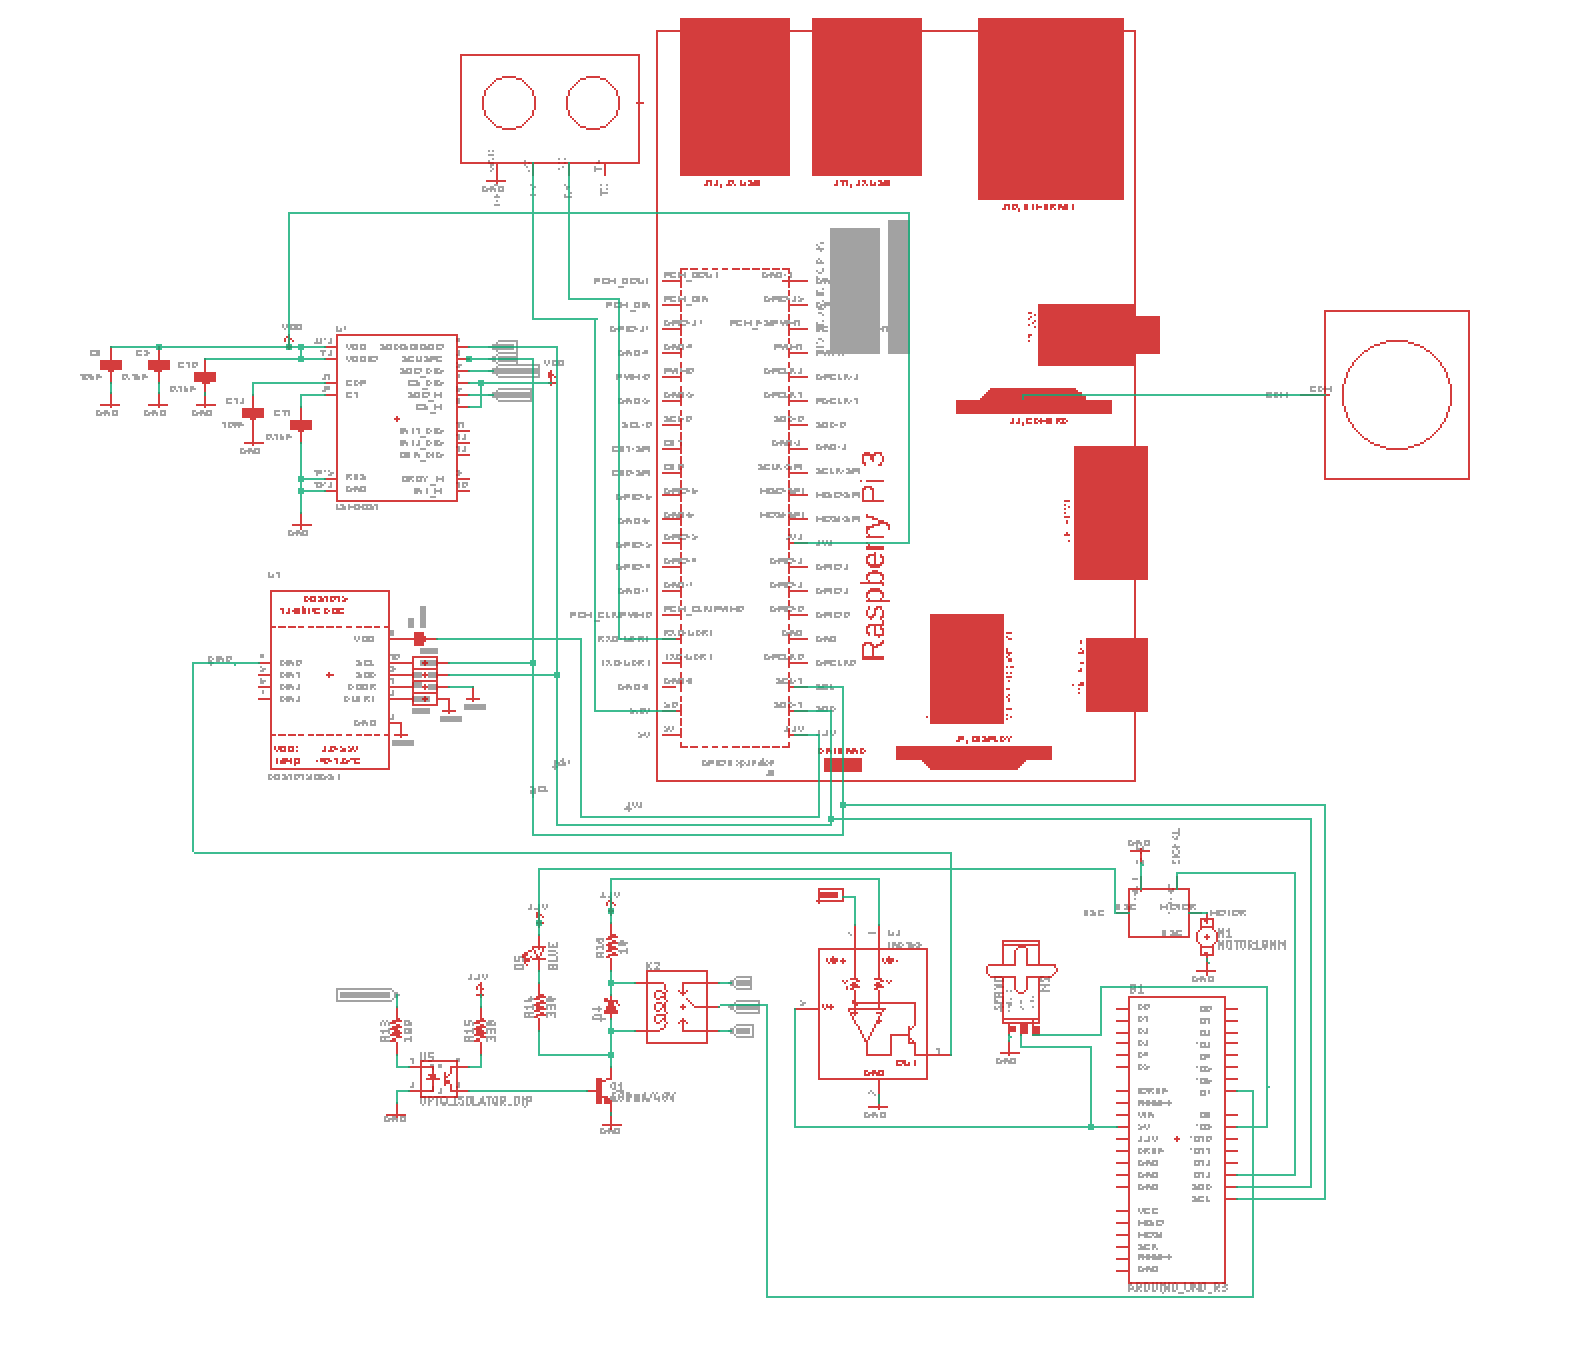 ../../_images/wiring_schematics.png